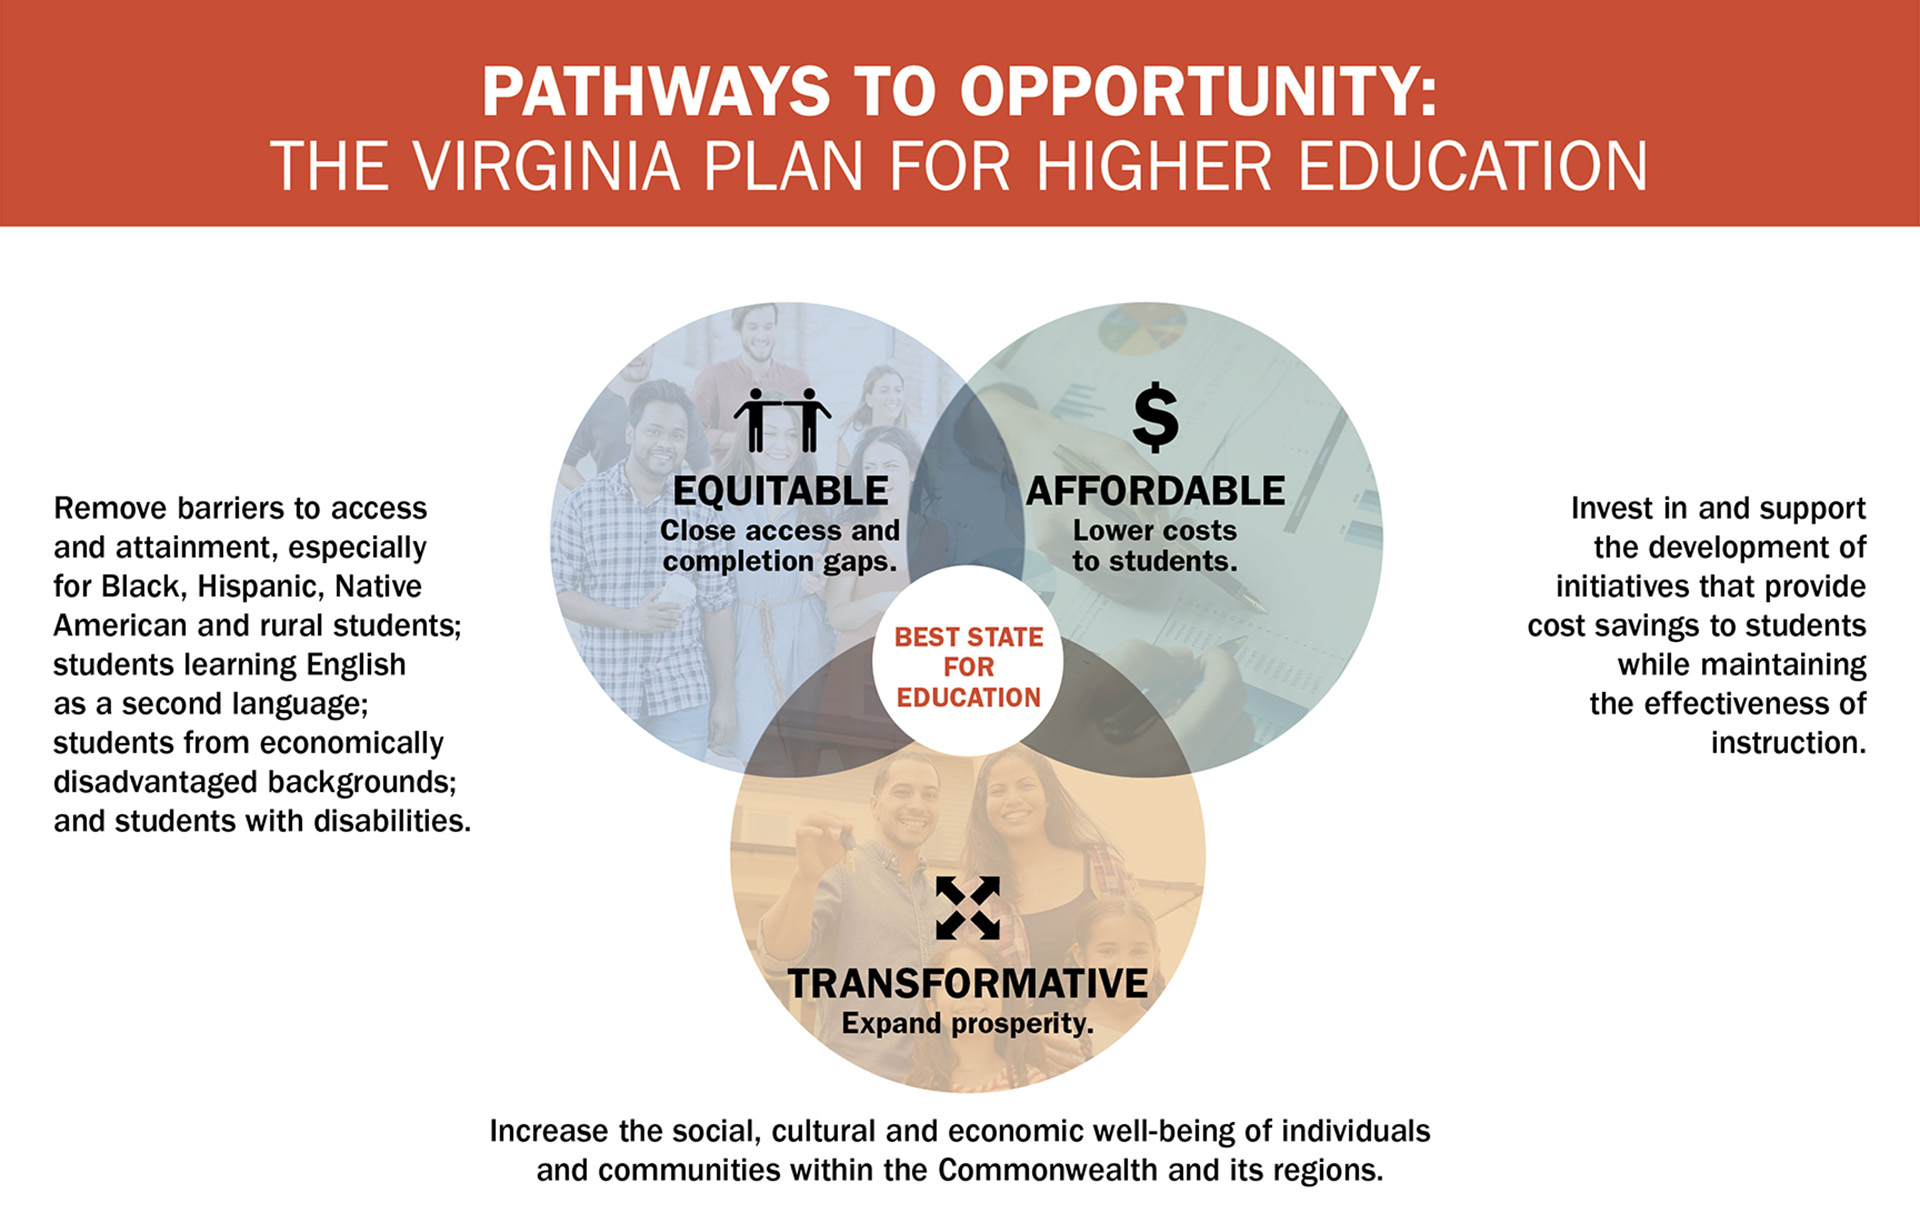 Virginia Plan Goals